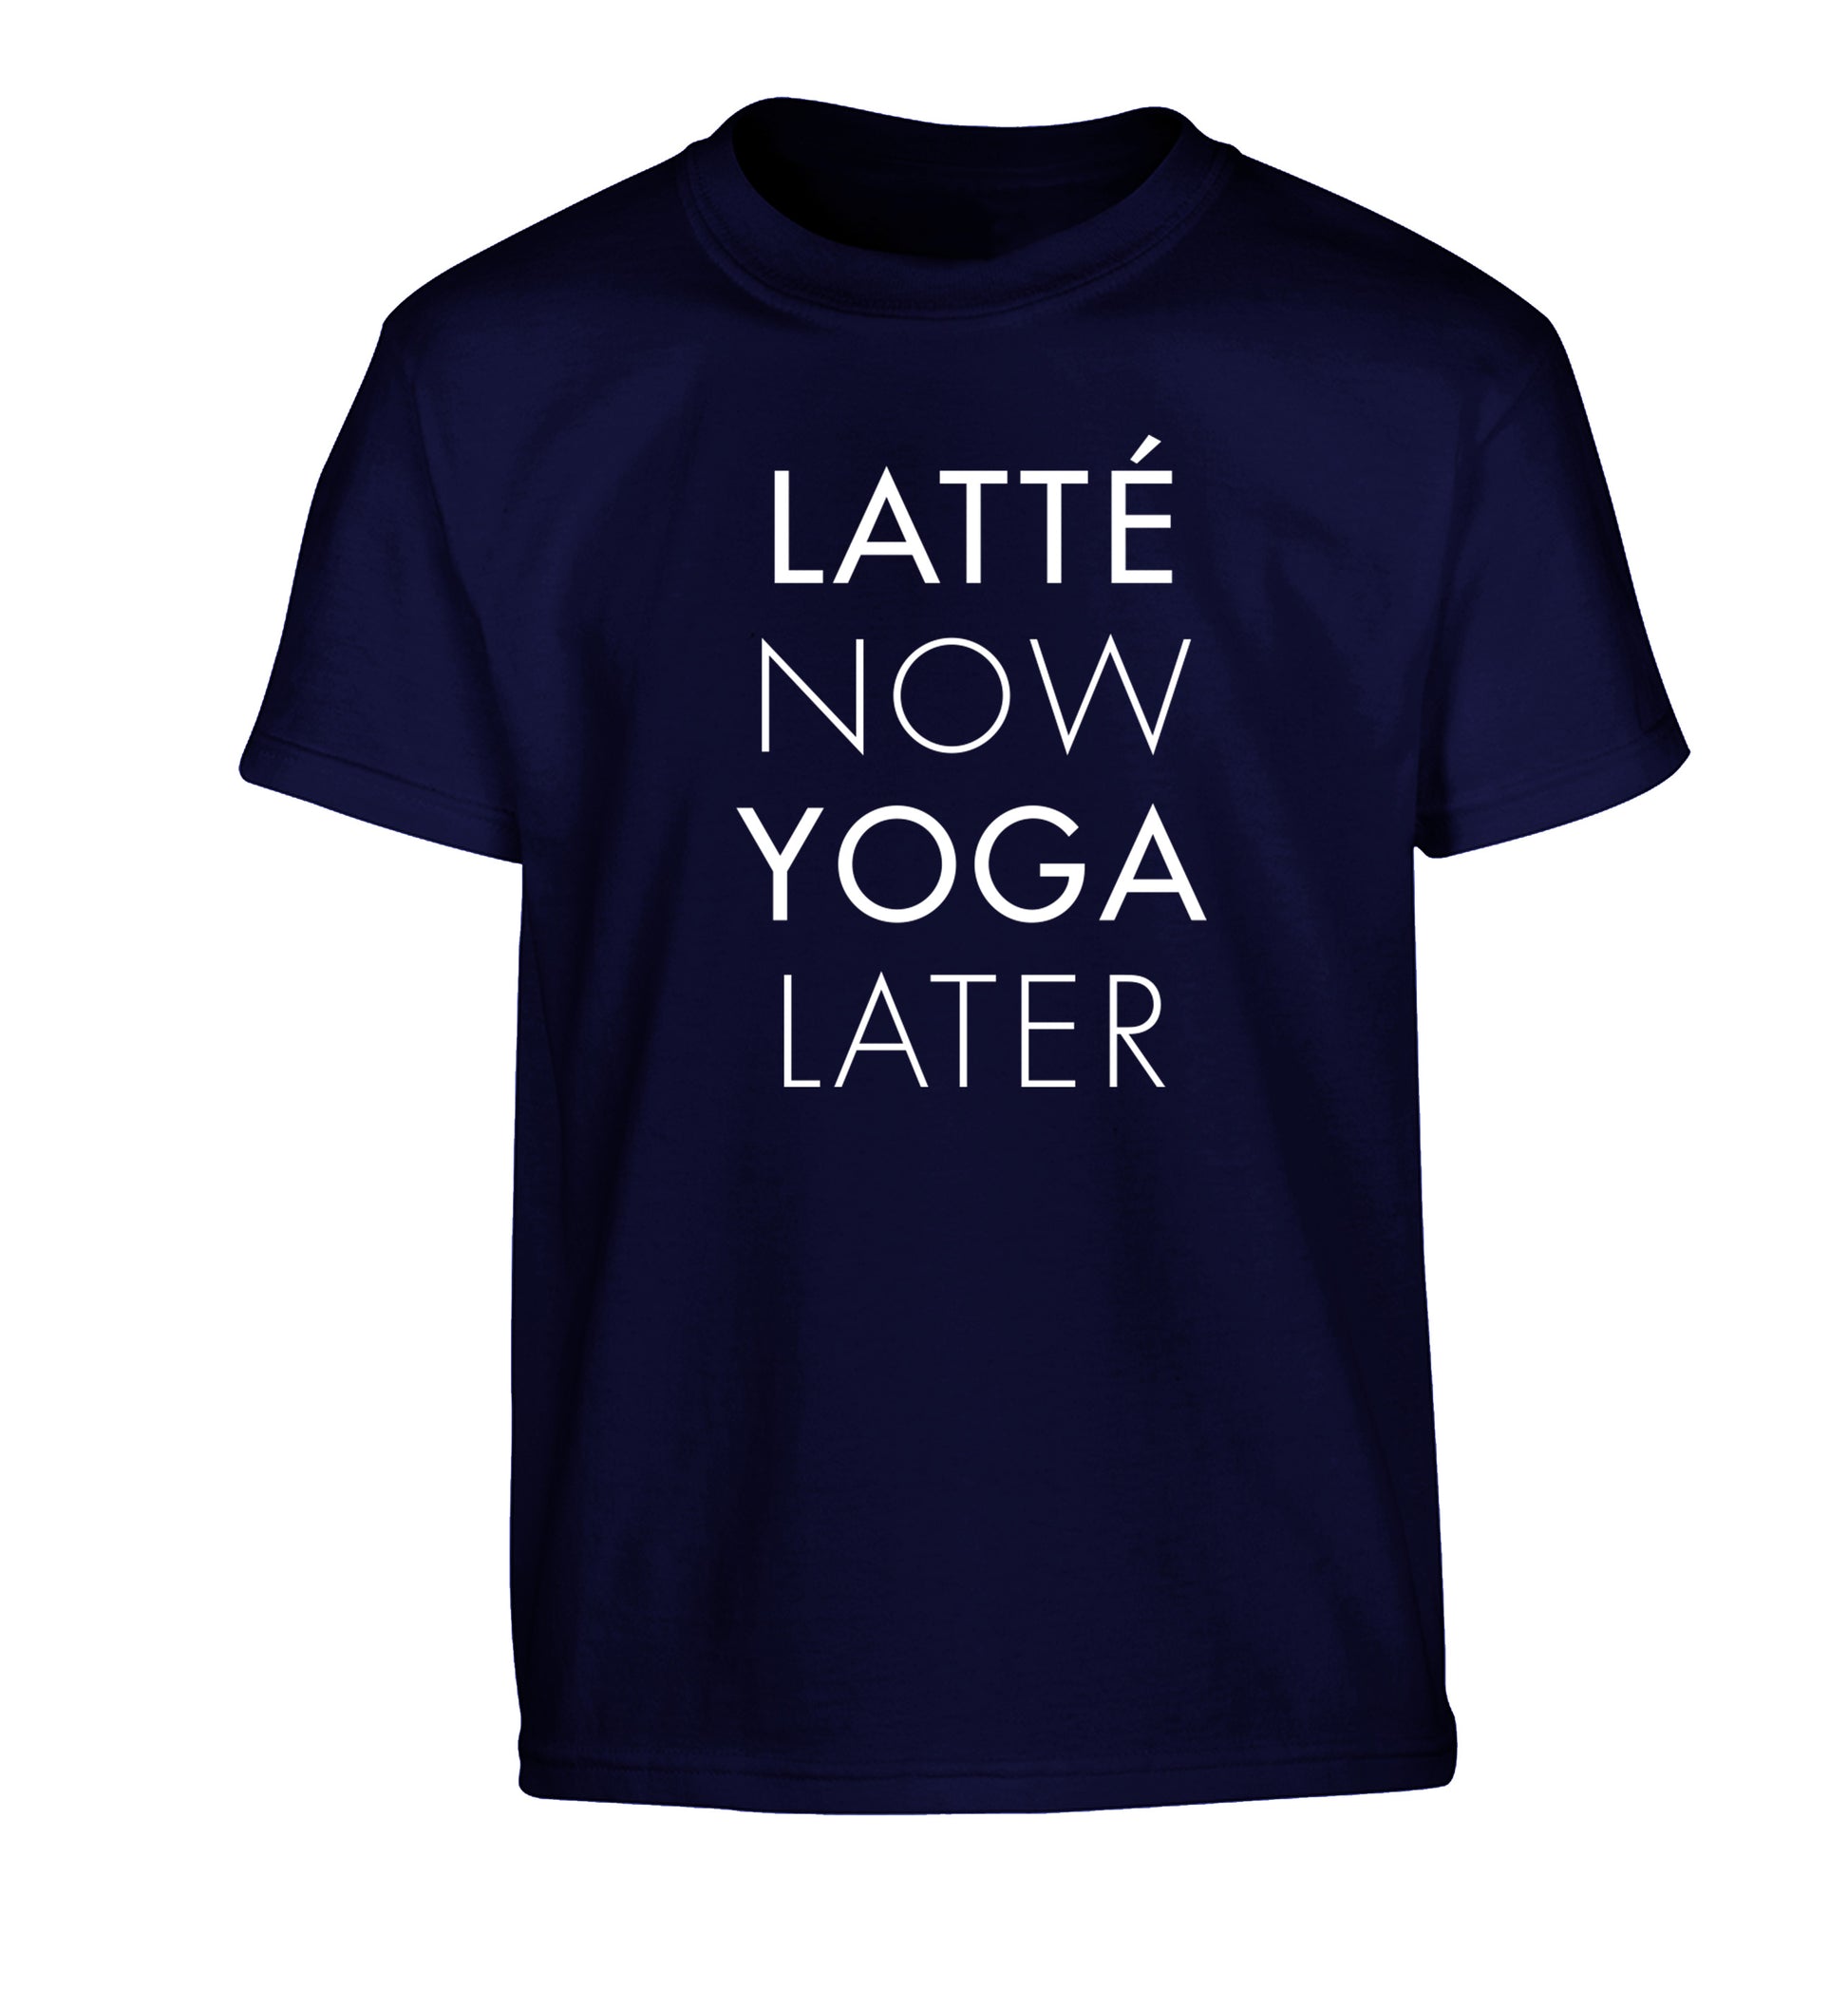 Latte now yoga later Children's navy Tshirt 12-14 Years